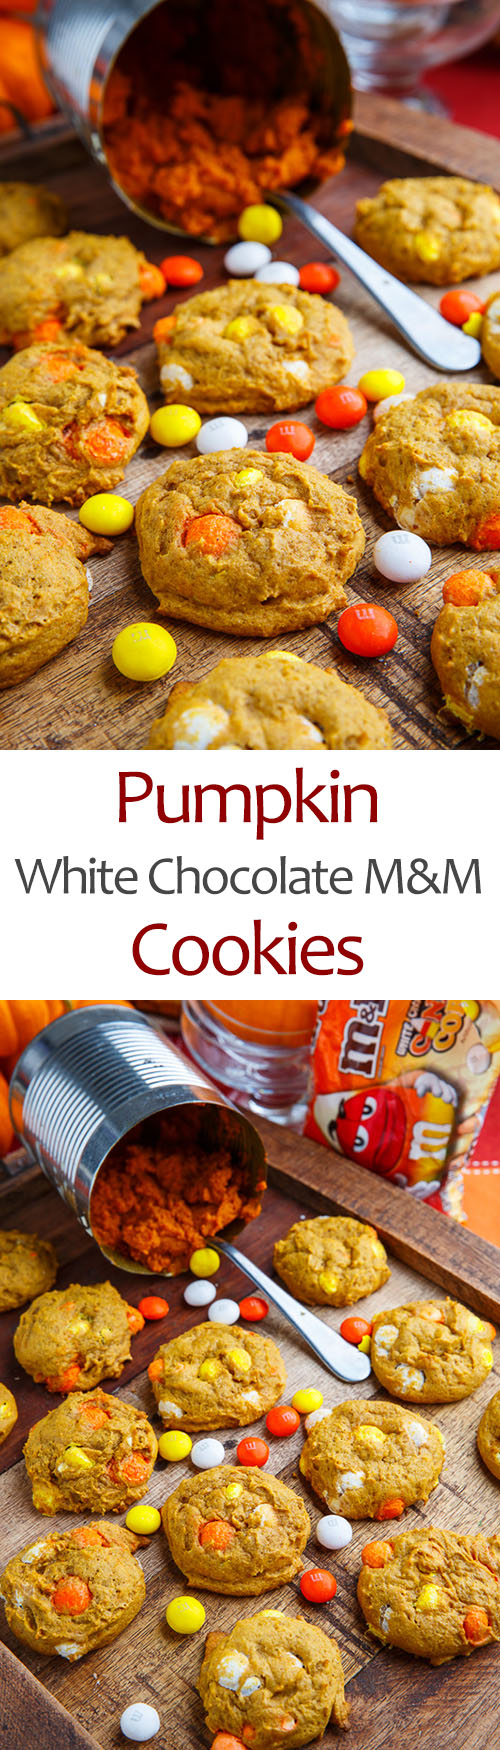 Pumpkin White Chocolate M&M Cookies